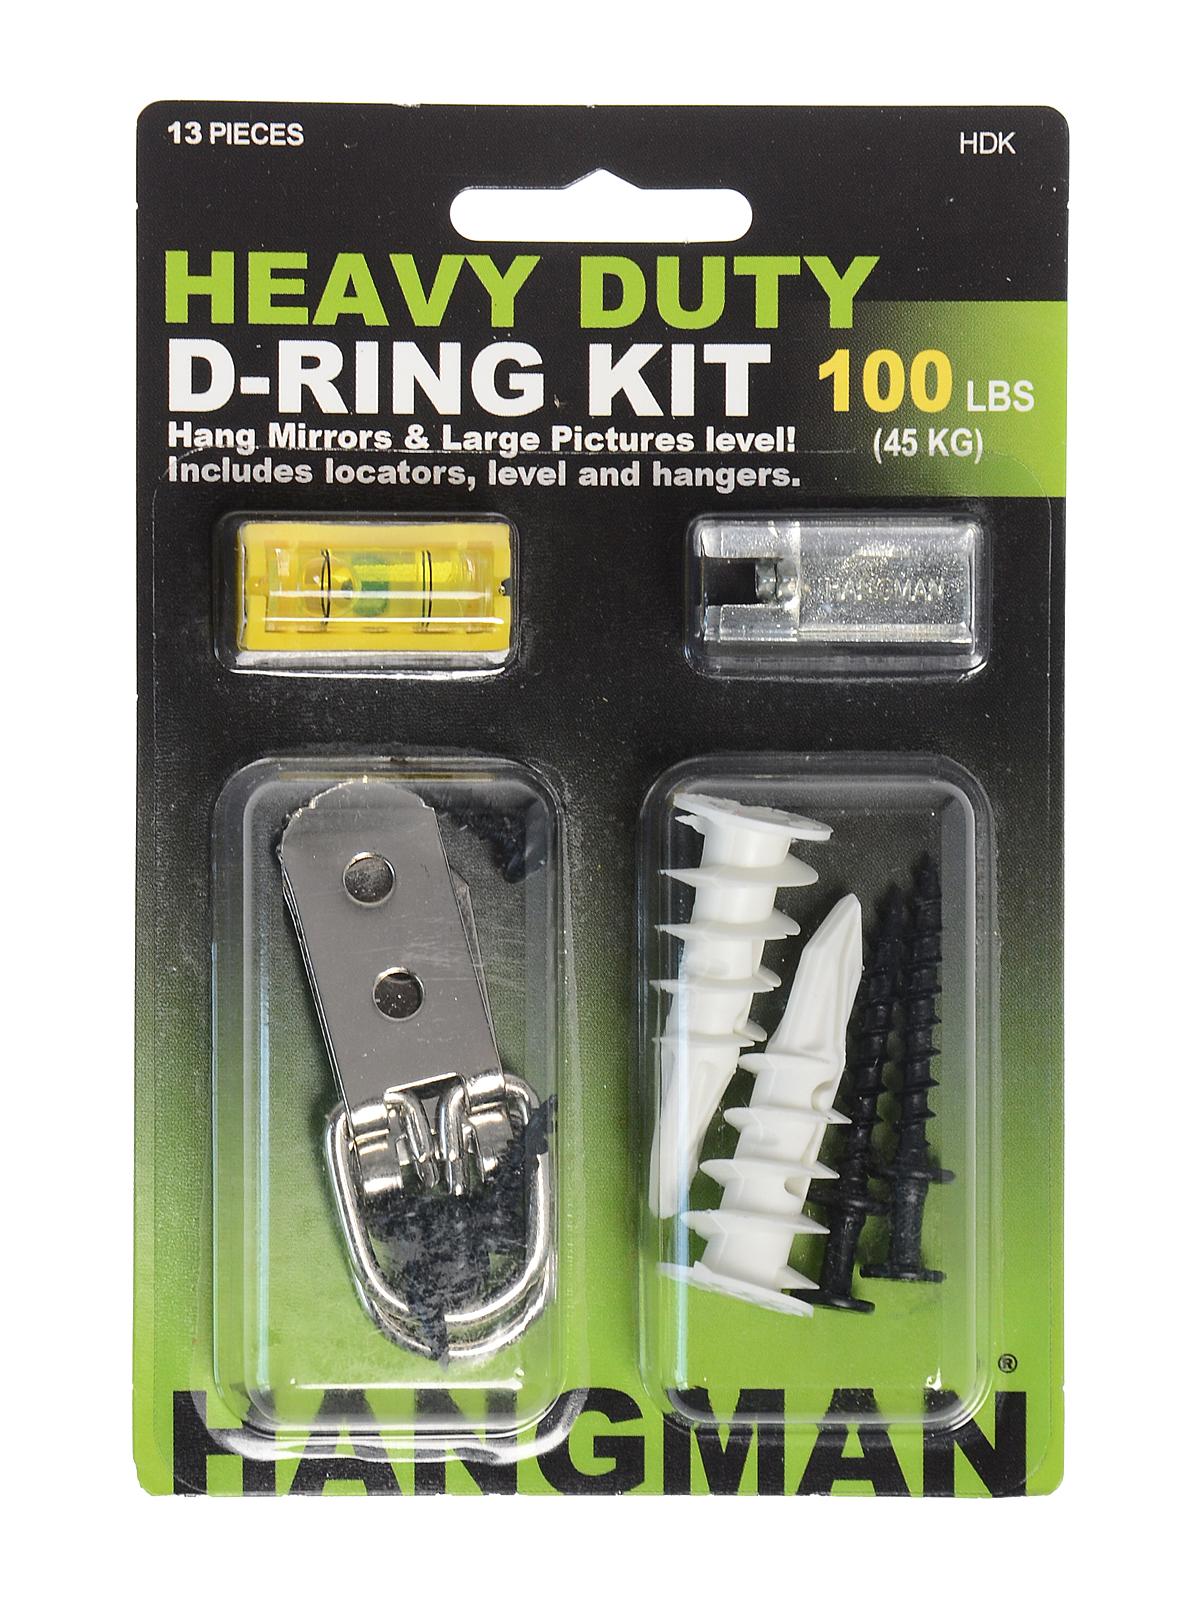 Heavy Duty D-ring Hanging Kit Each